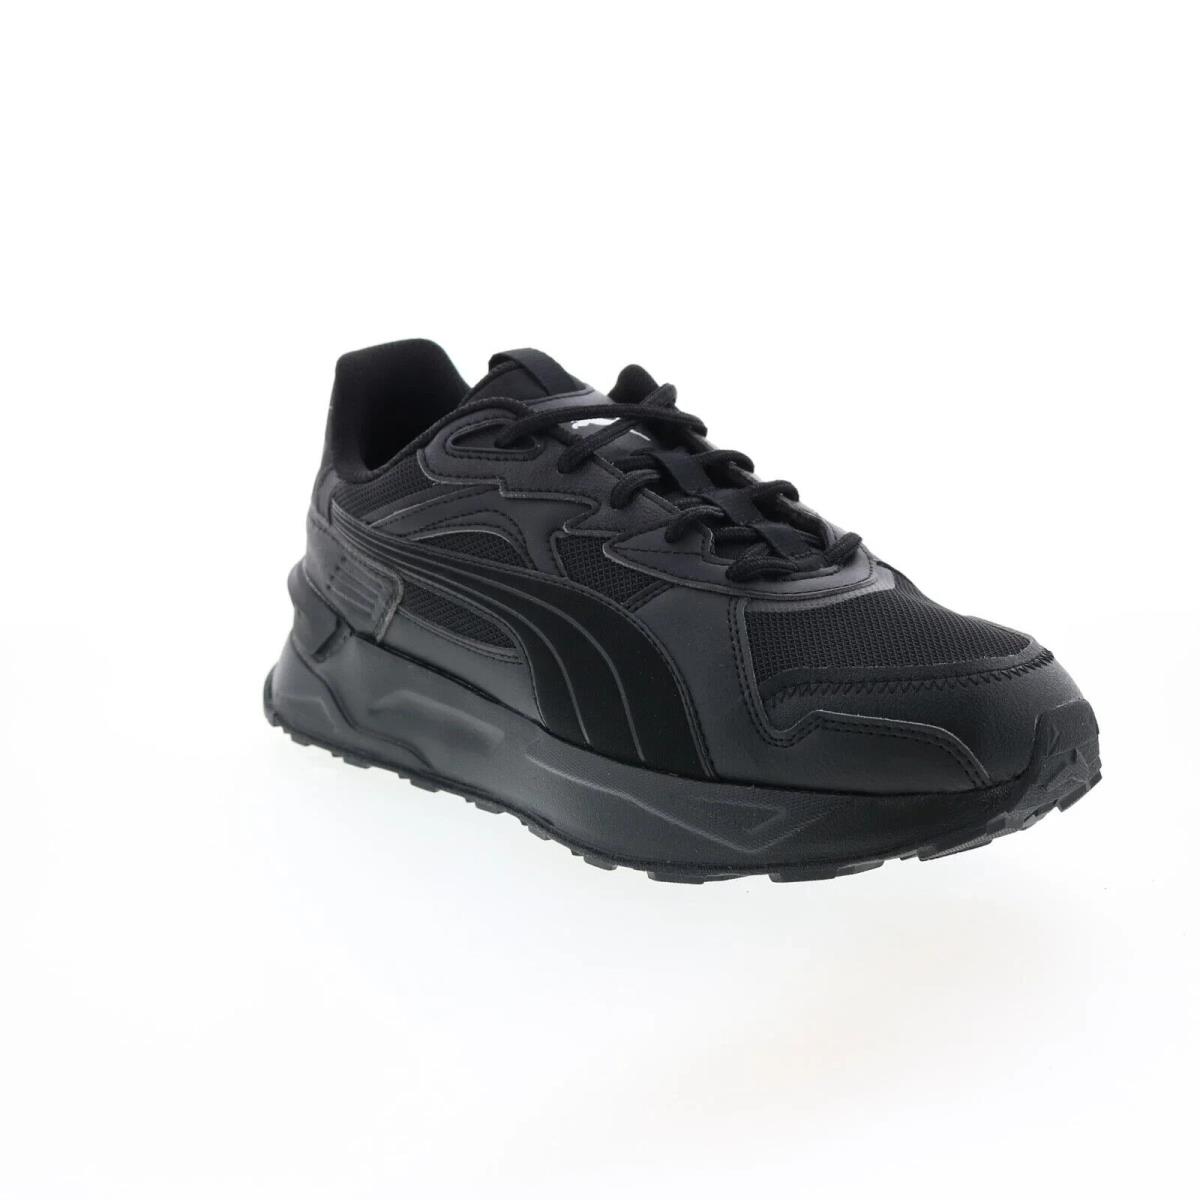 Puma N57102 Men`s Black Mirage Sport Asphalt Lace Up Sneakers Size EU 44 US 10.5 - Black